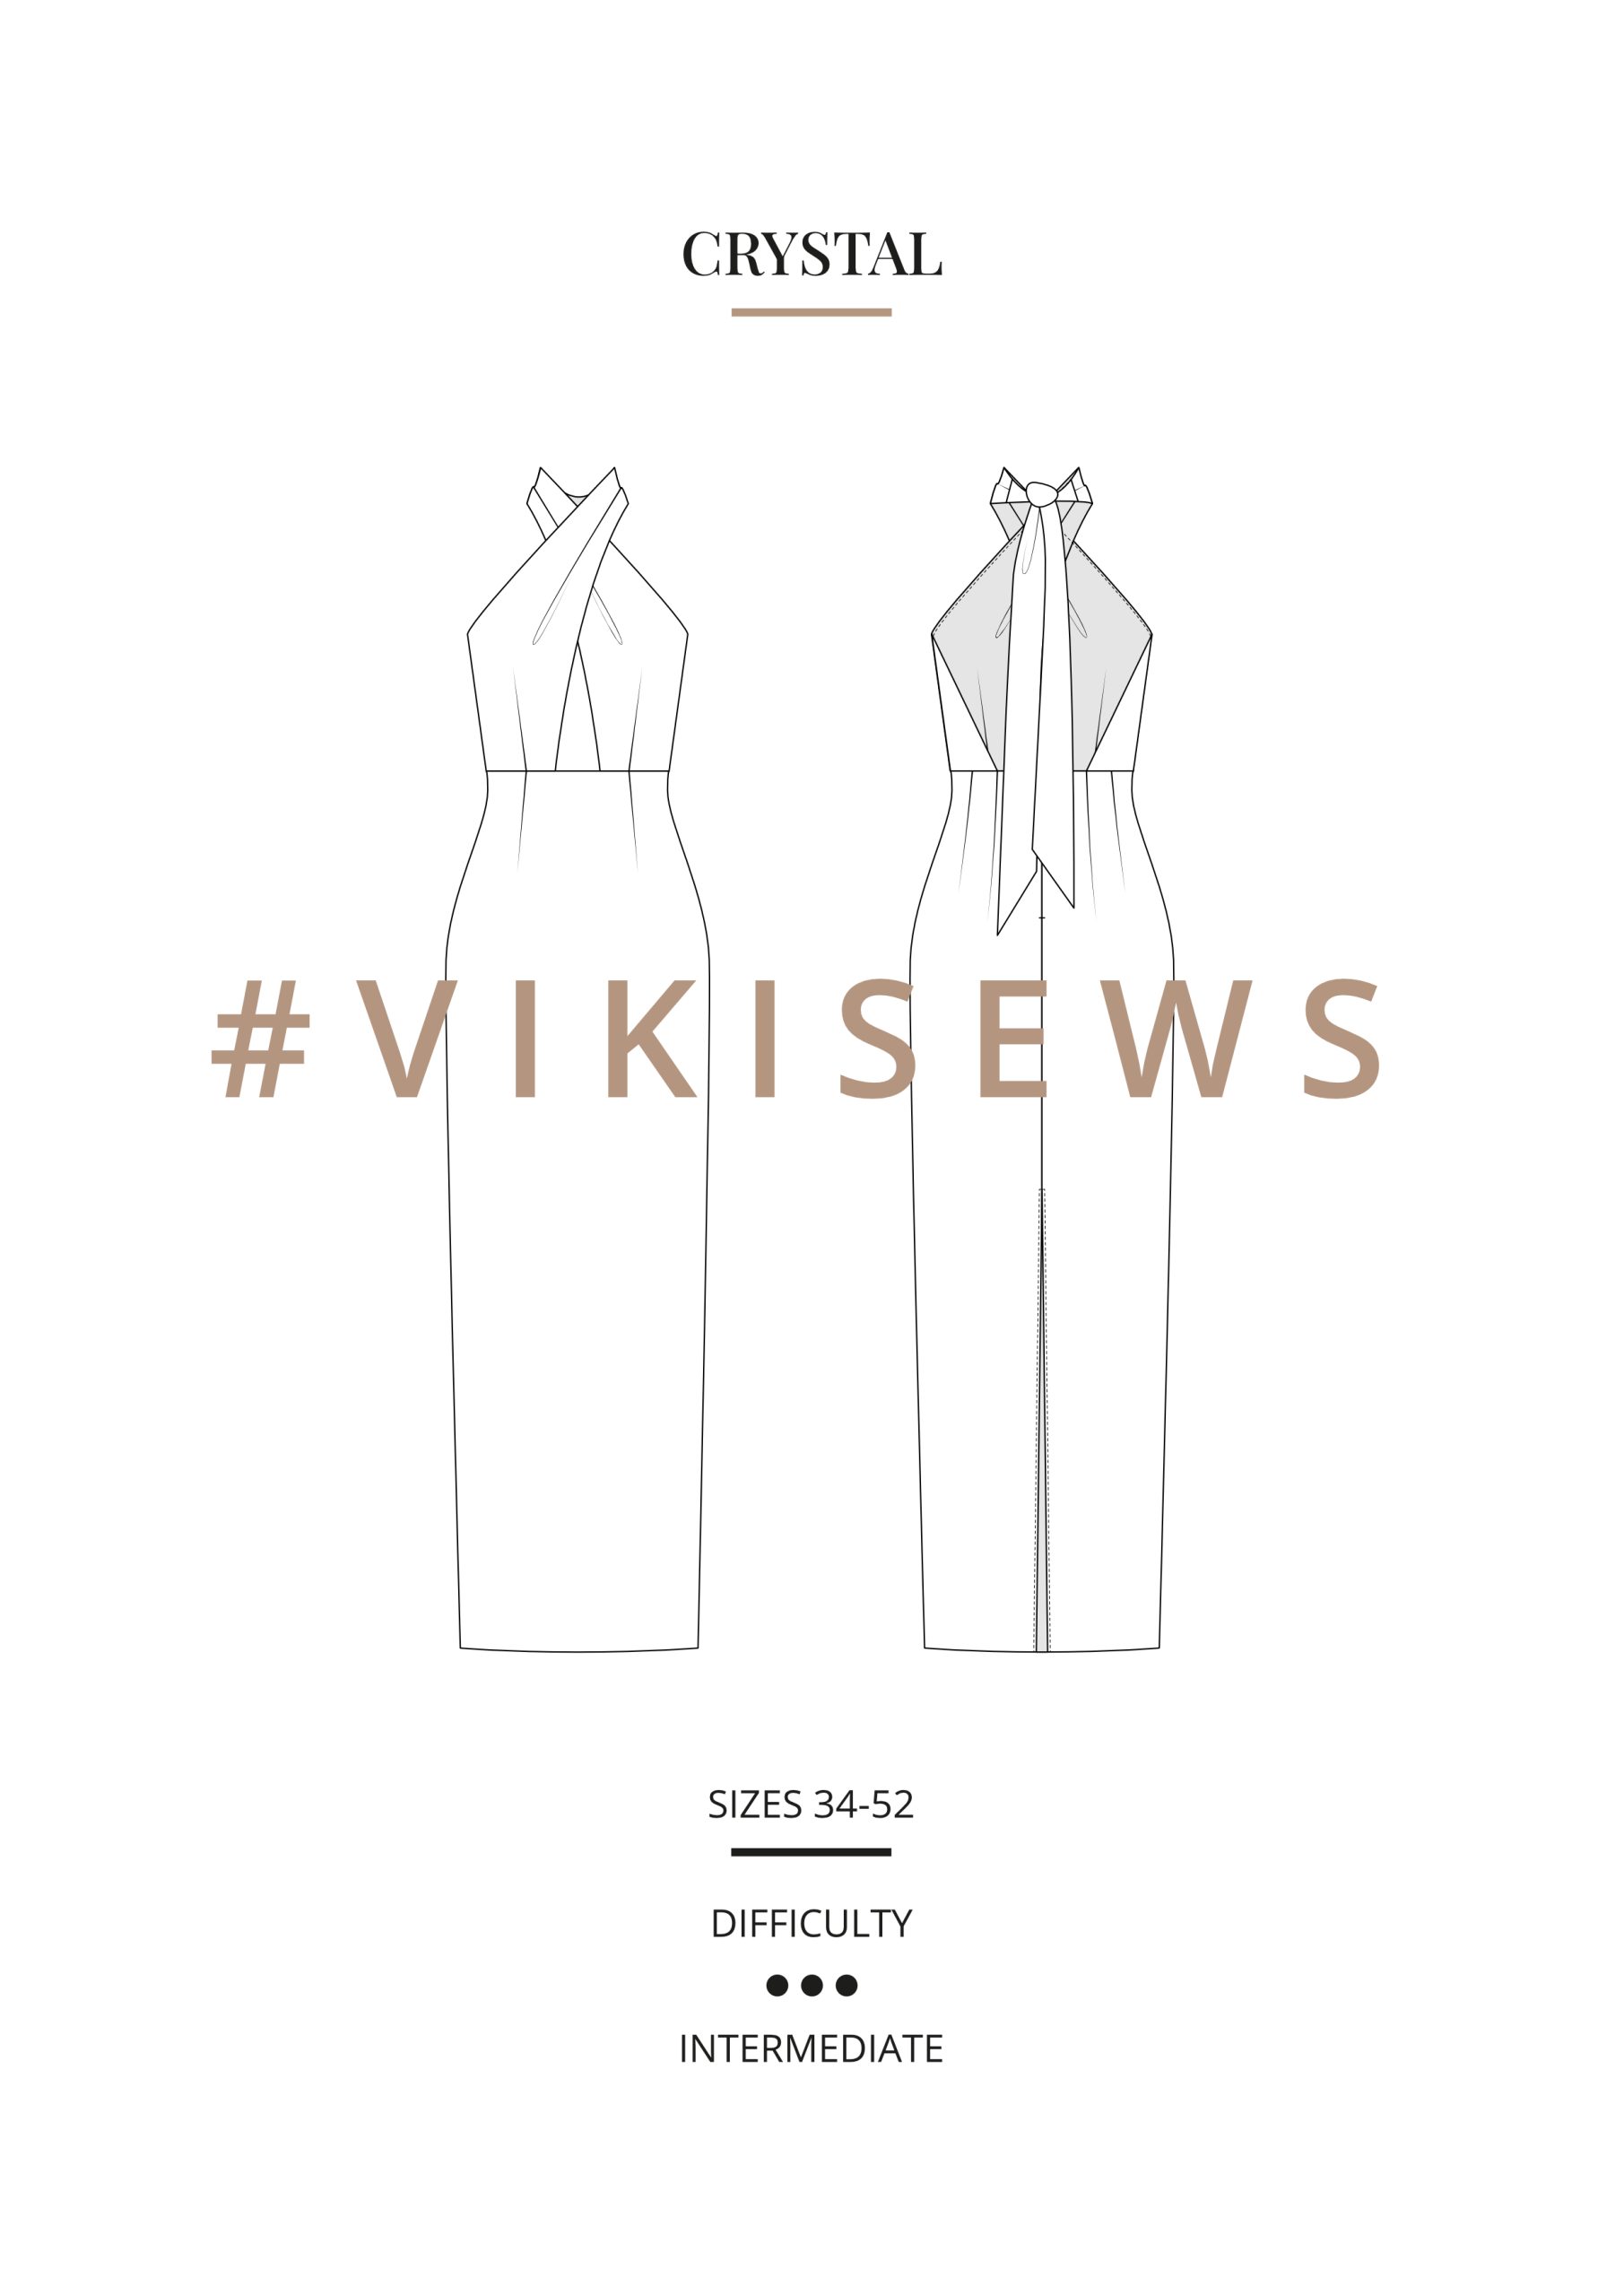 Vikisews Crystal Dress PDF